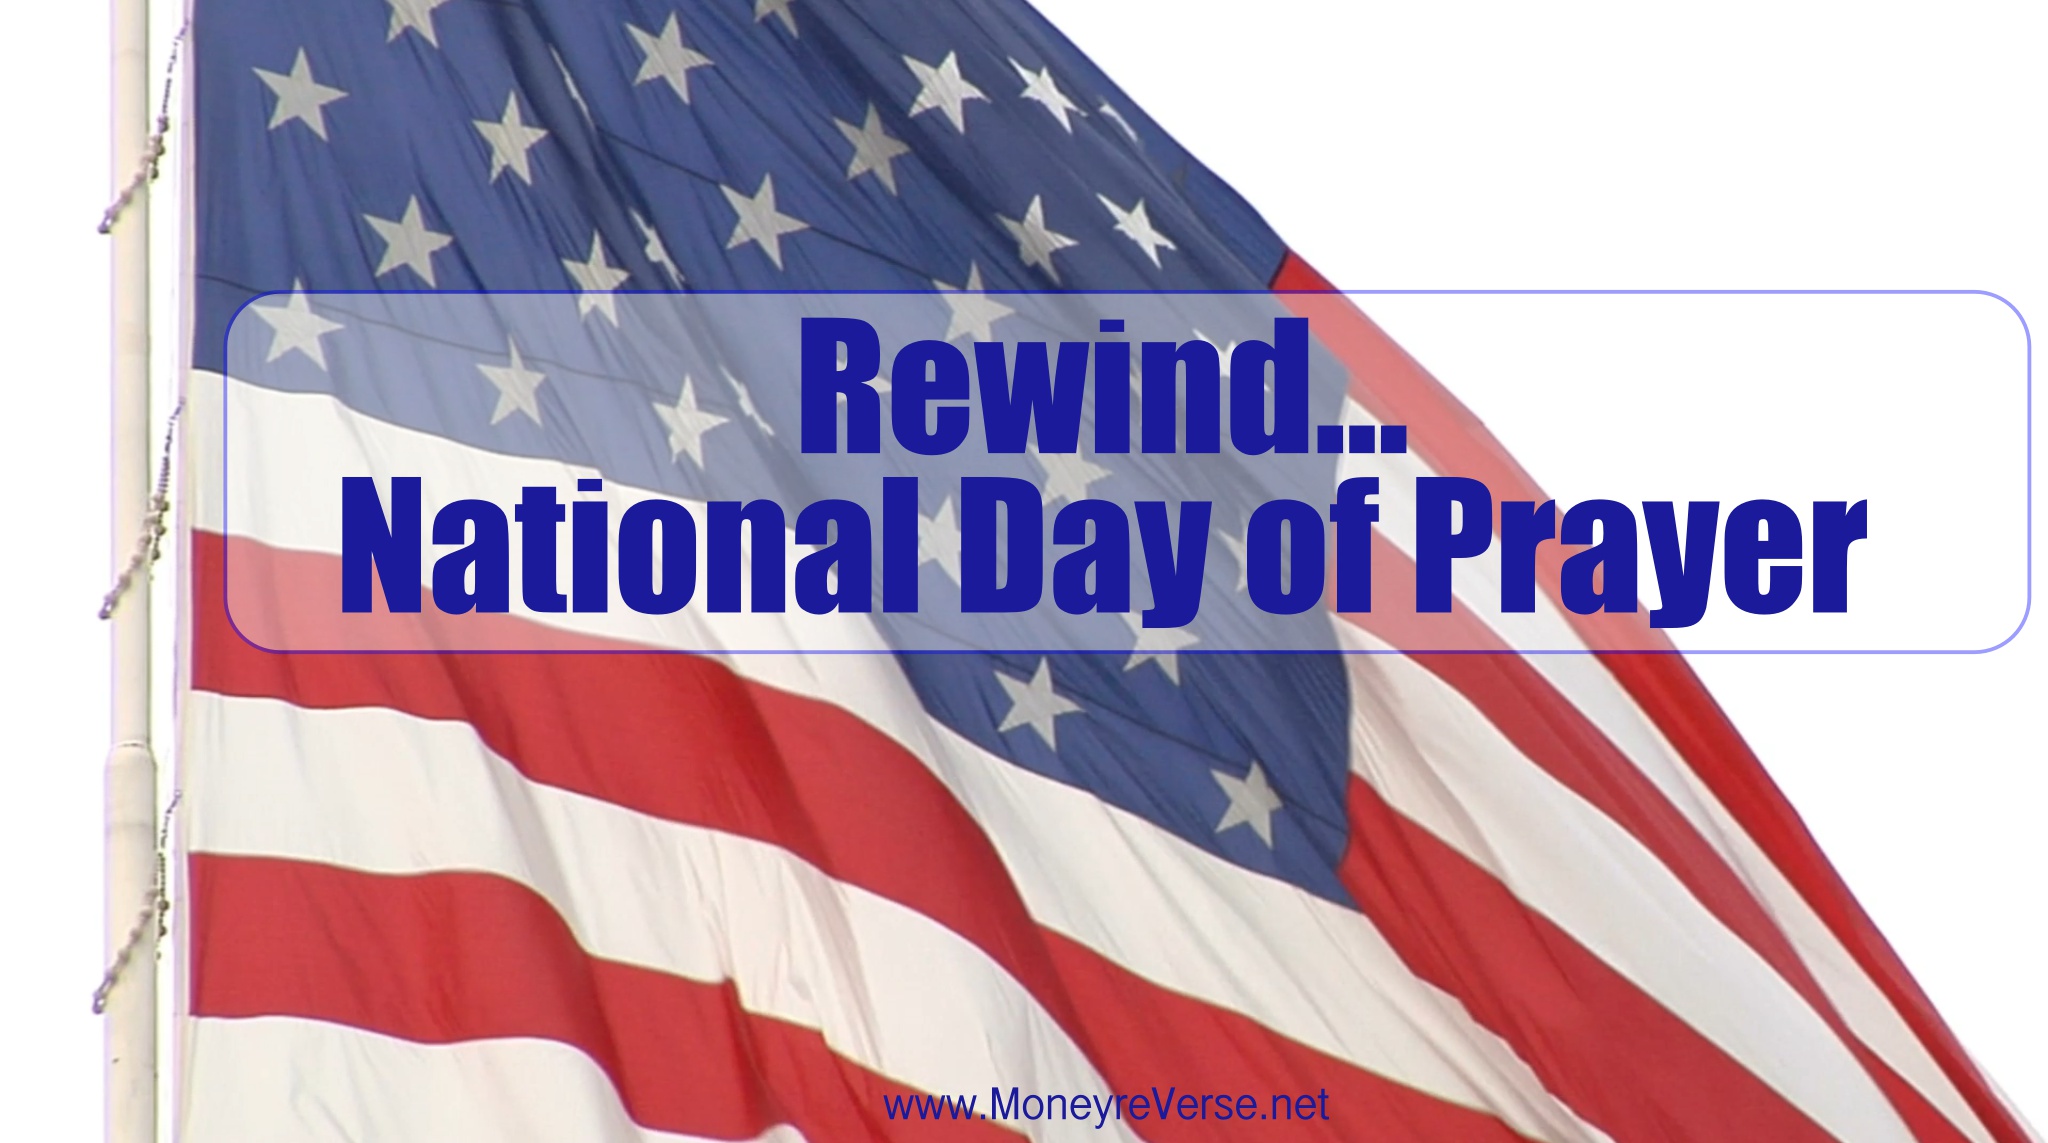 Money reVerse Rewind National Day of Prayer